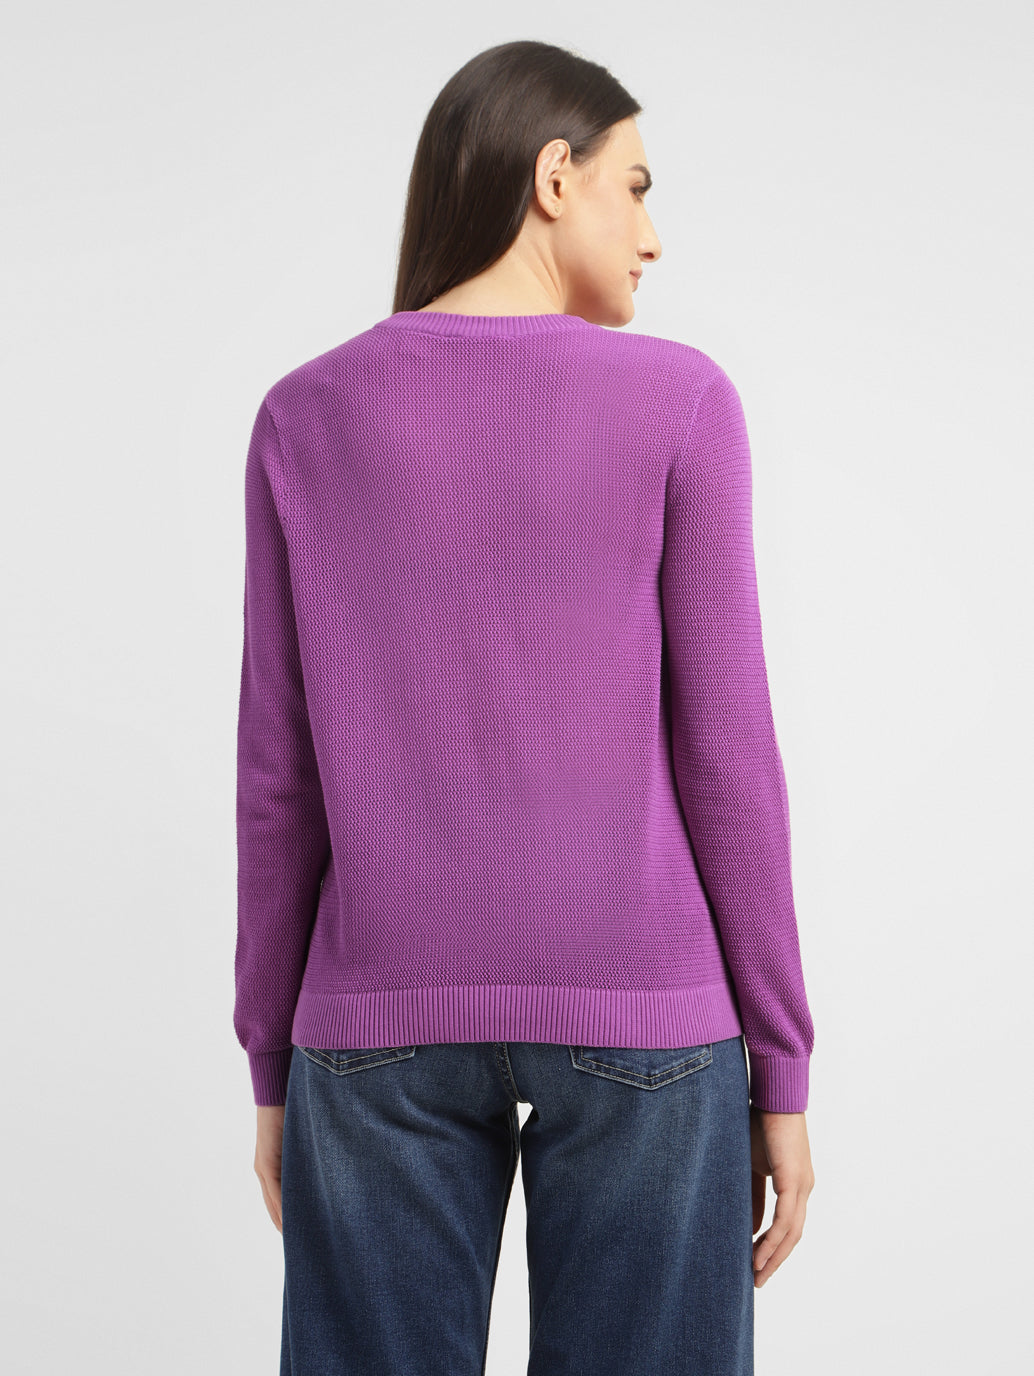 Women's Solid Round Neck Sweater